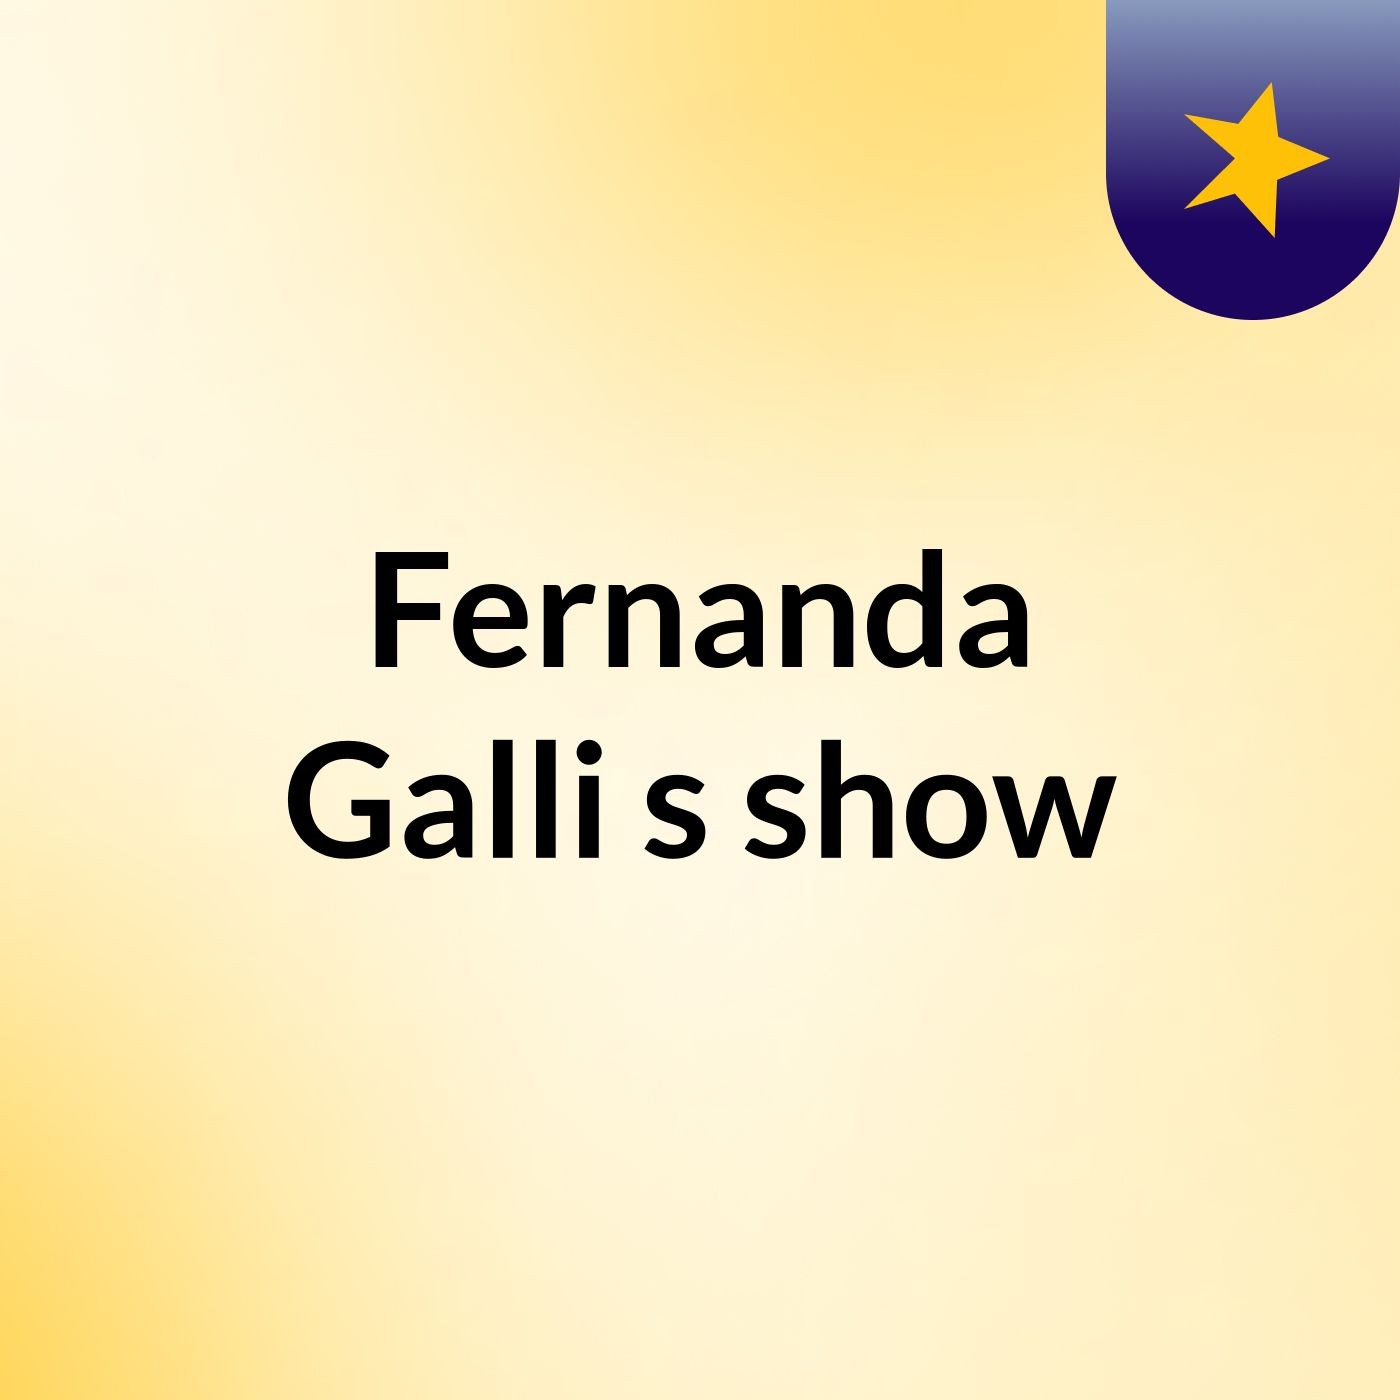 Fernanda Galli's show